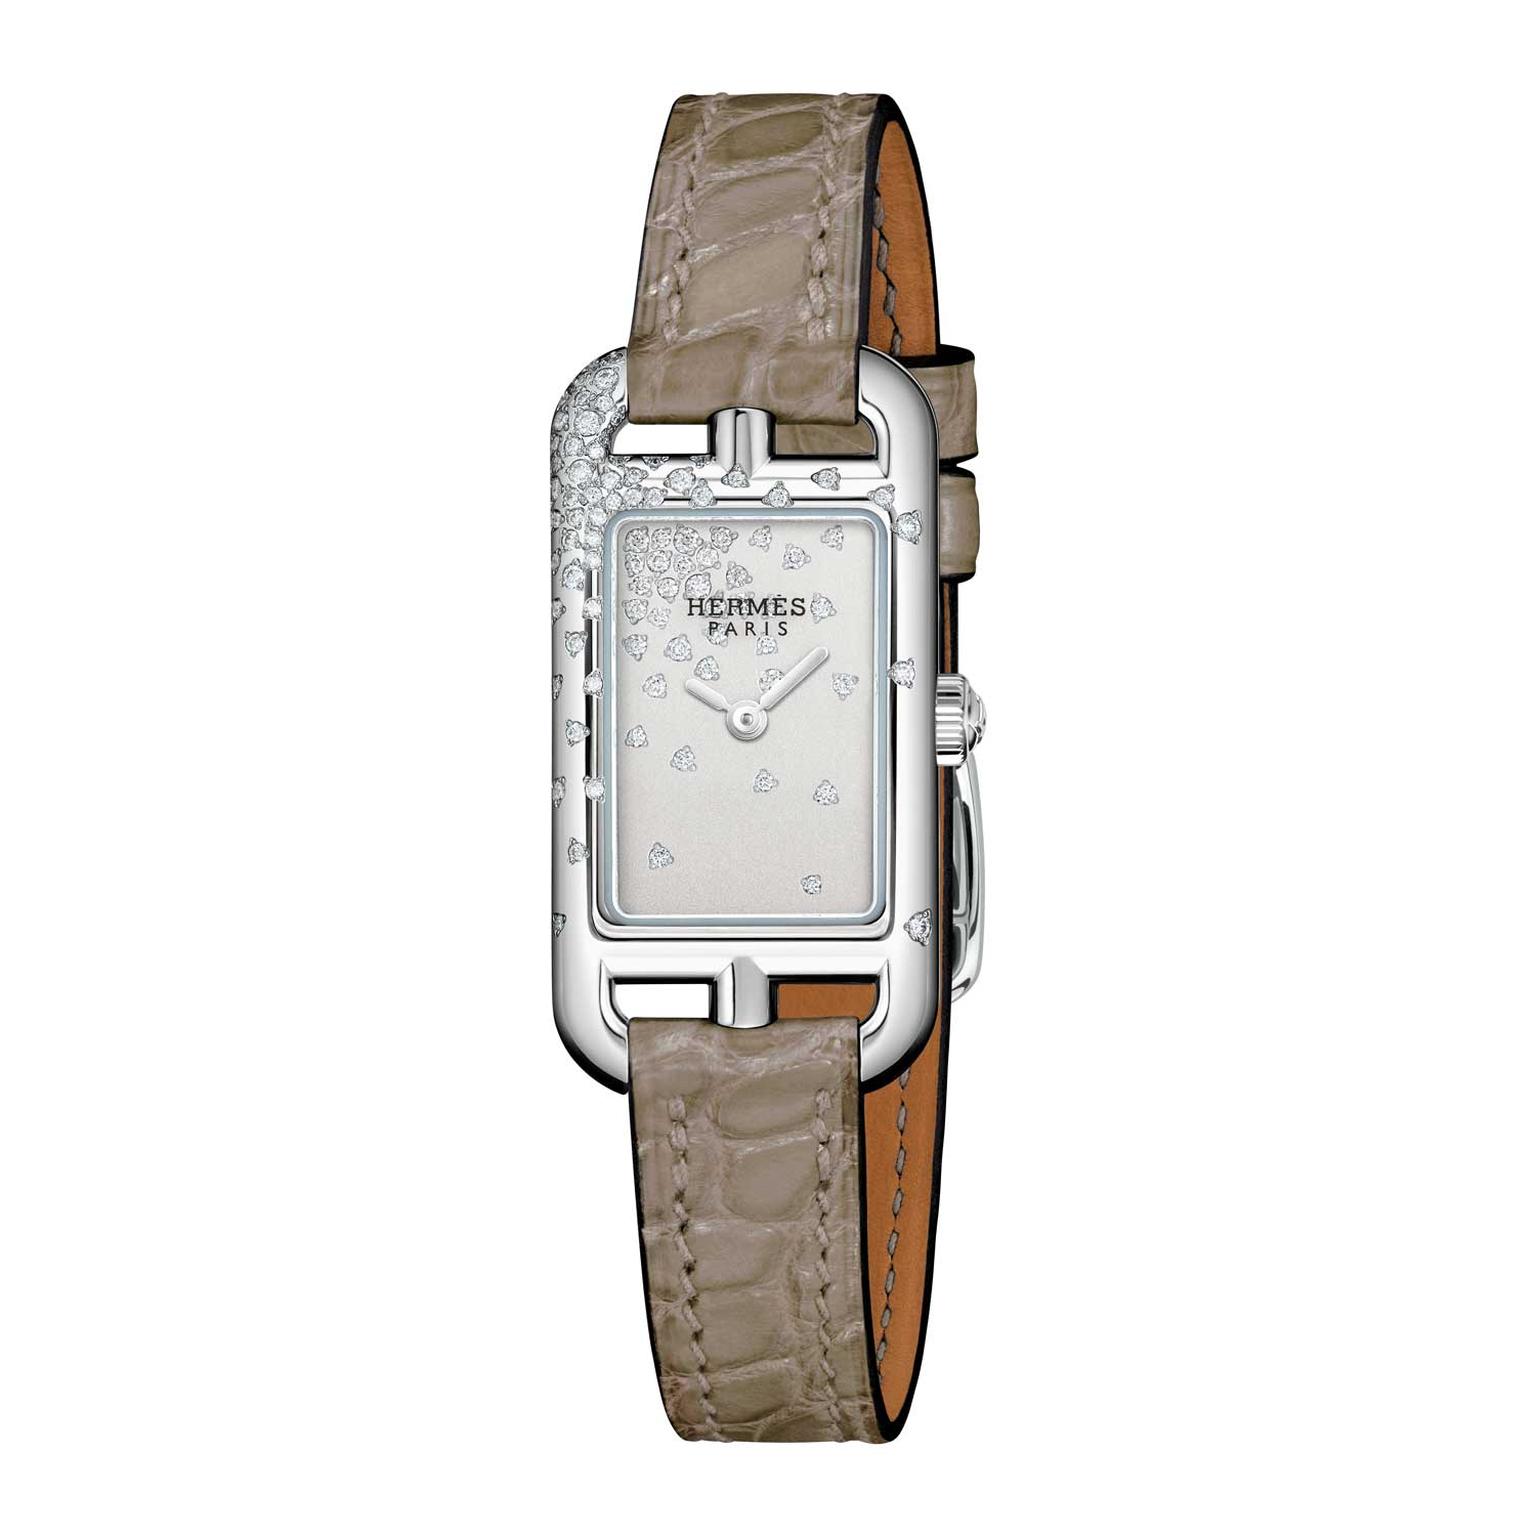 Hermes Nantucket Jete de diamants watch with brown alligator leather strap